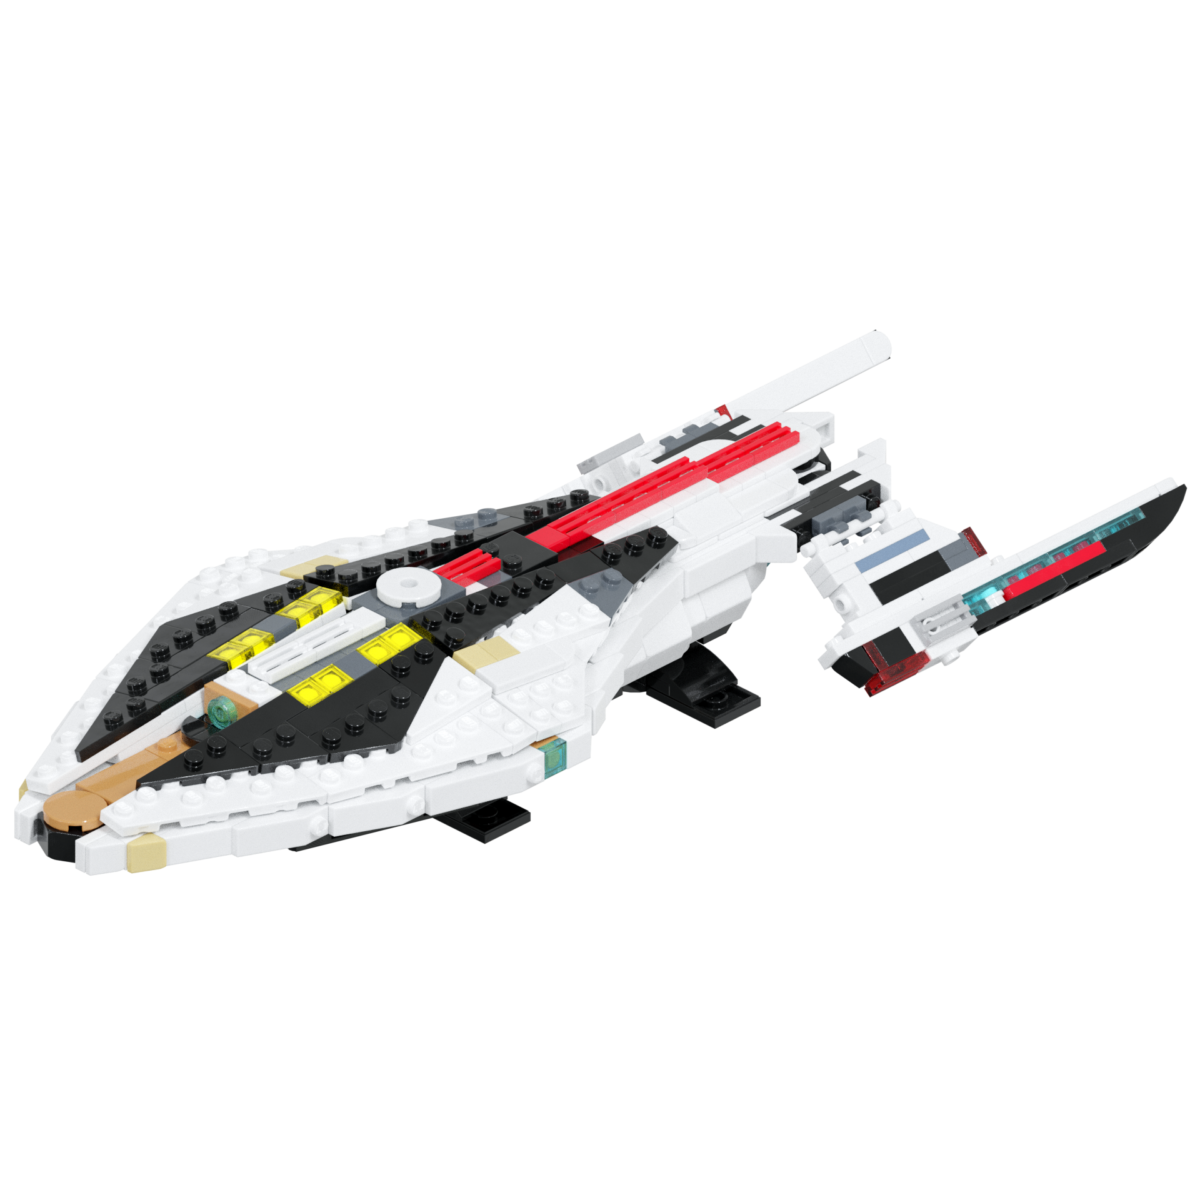 LEGO Pathfinder-class Long-Range Science Vessel Instructions / ky-e bricks